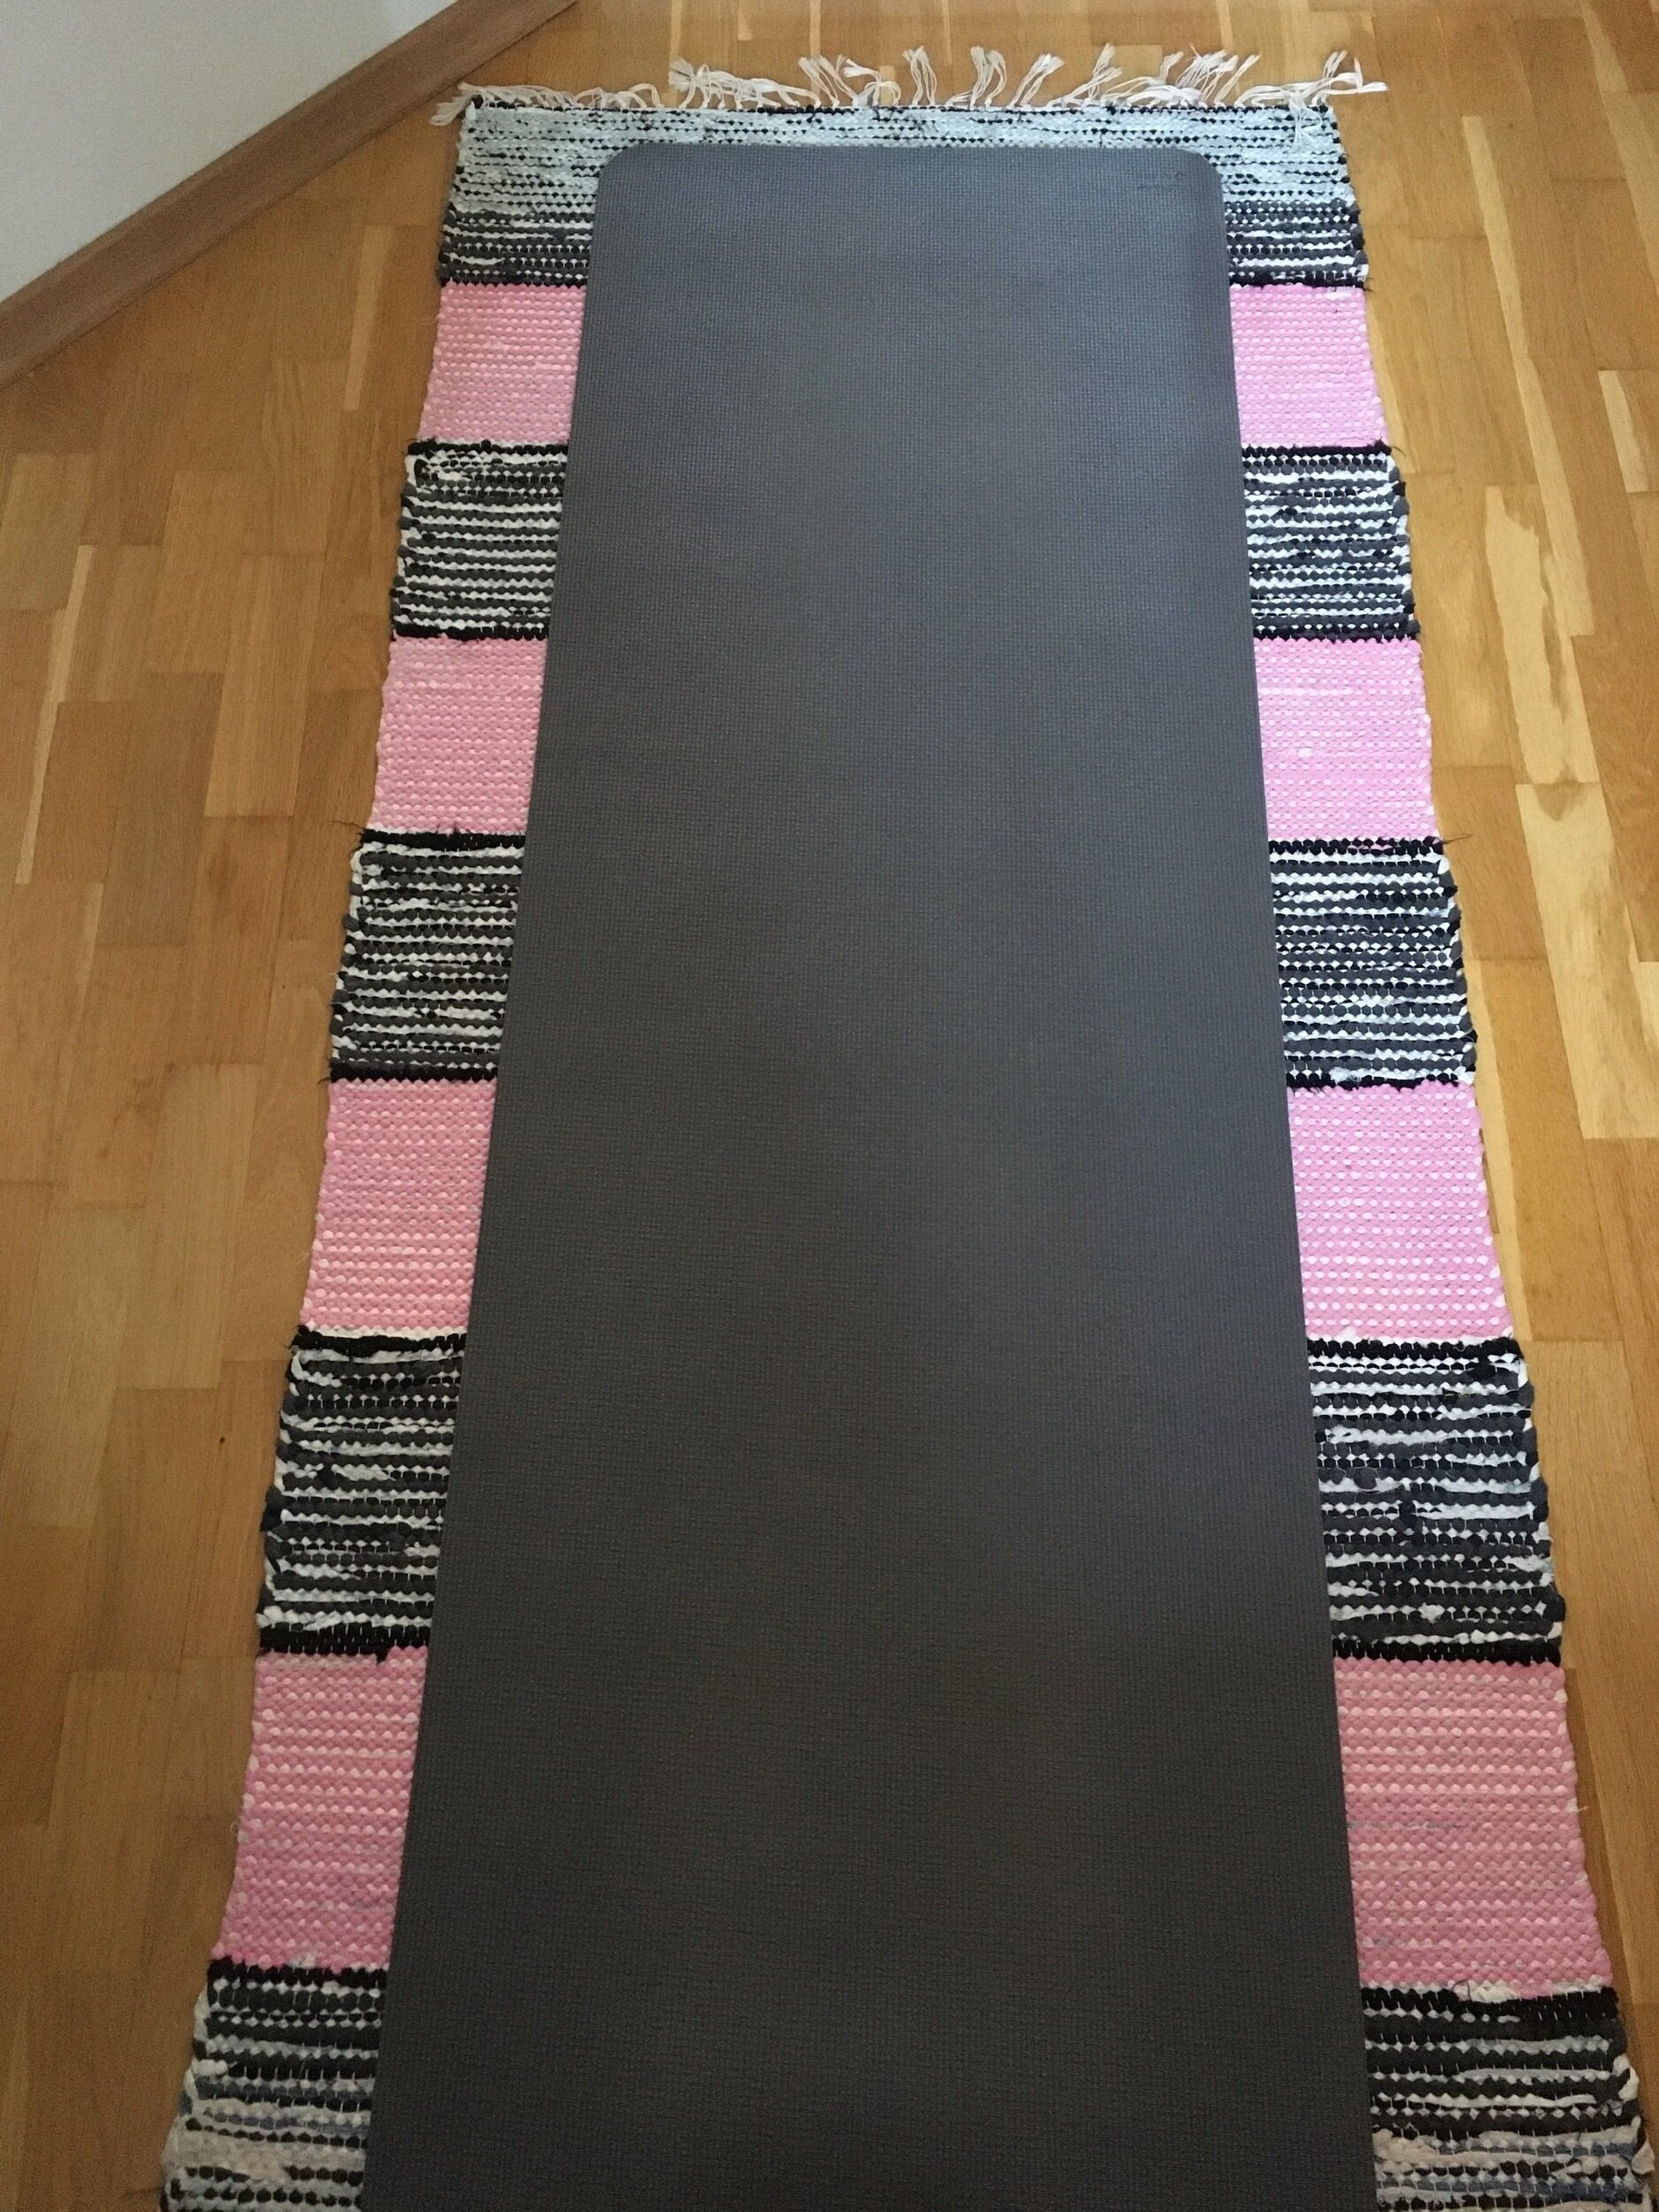 My yoga mat.